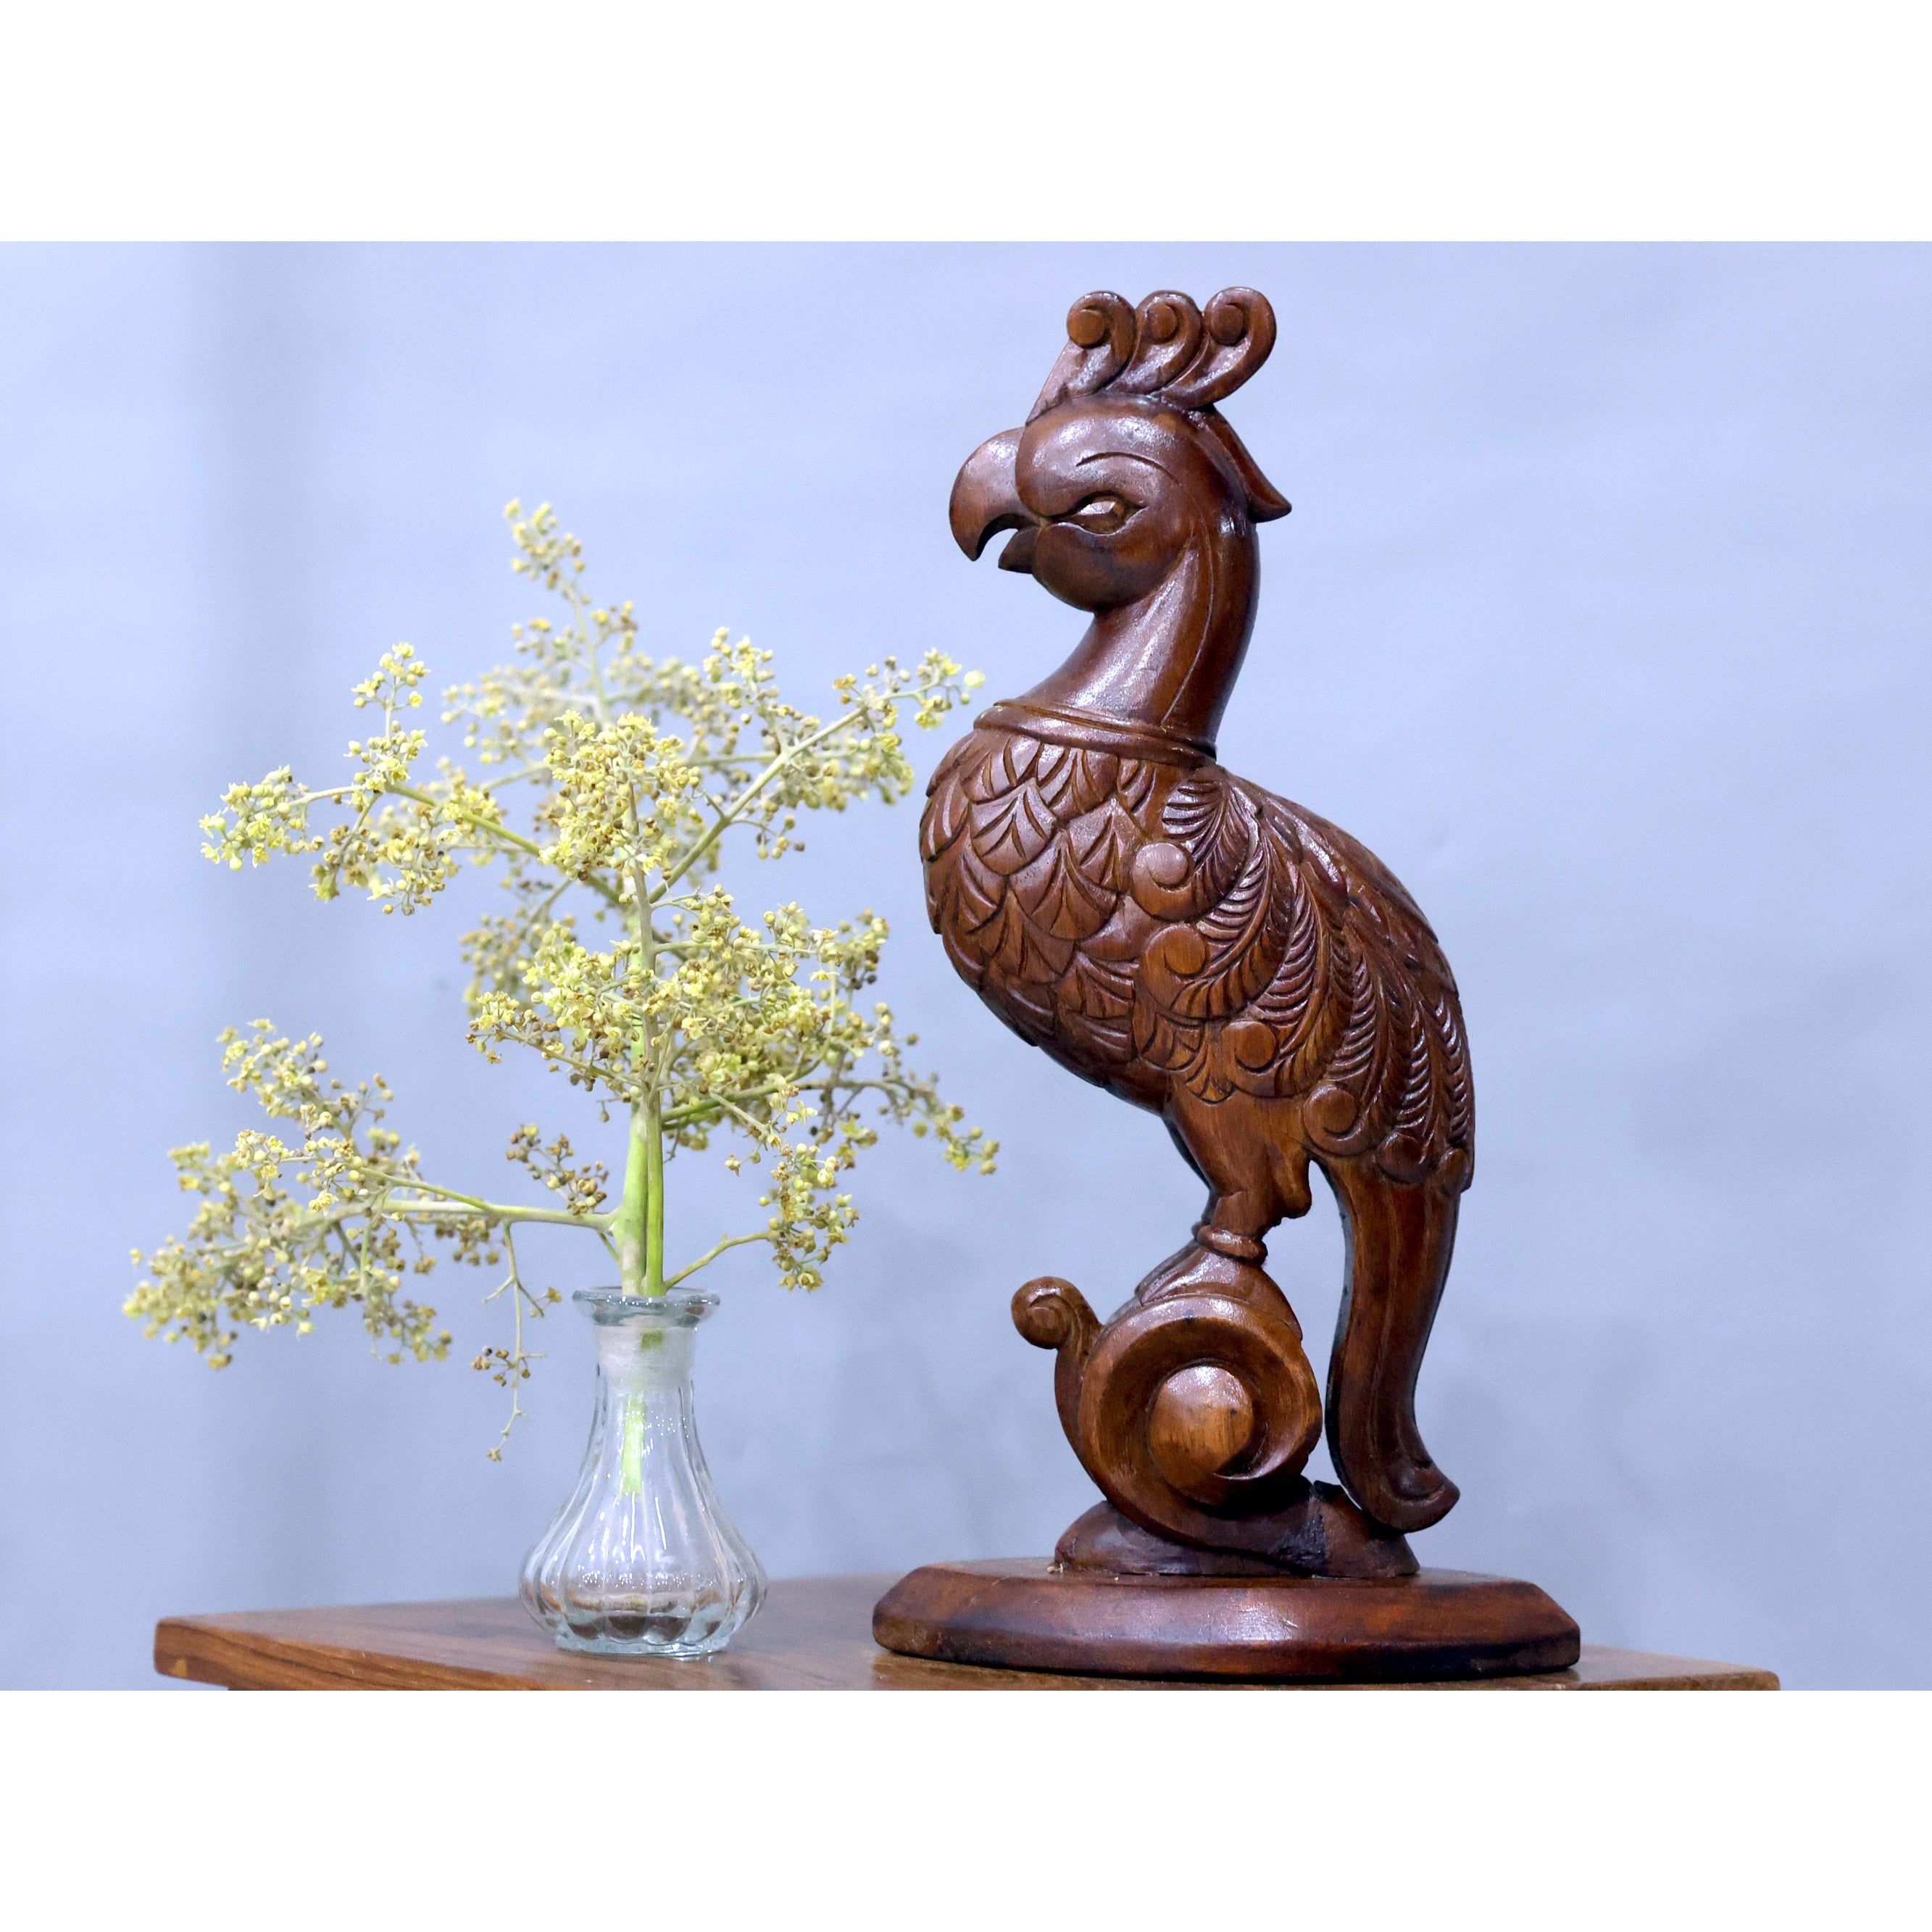 Wooden Beautifully Carved Bird Animal Figurine